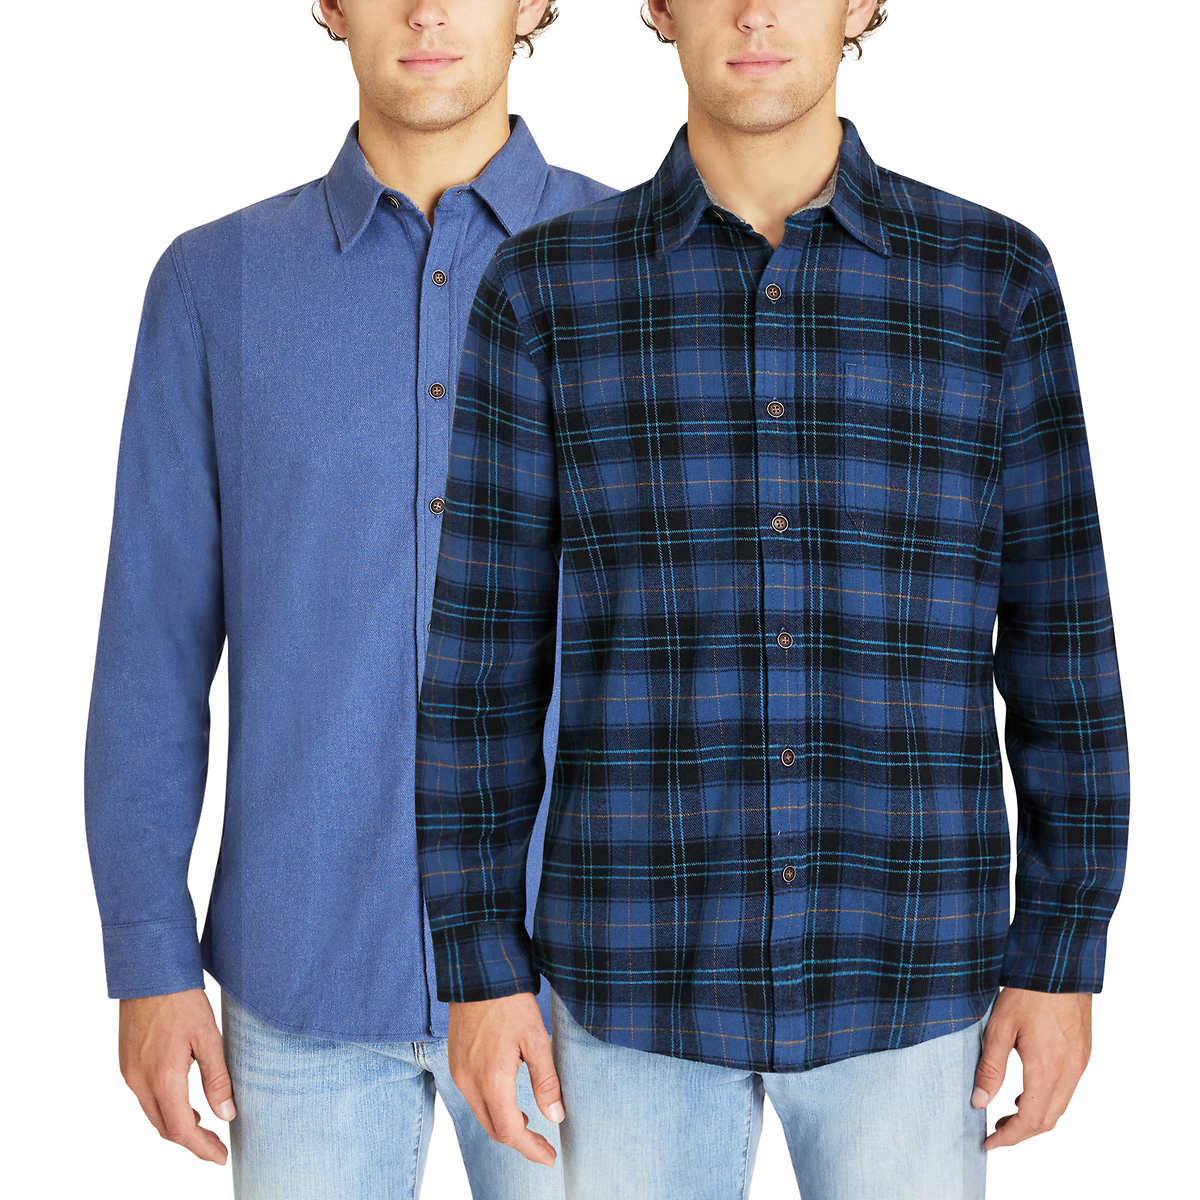 Men's Regular Check Shirt Navy Blue Plaid Premium Flannel Cotton Pocket Long Slv 